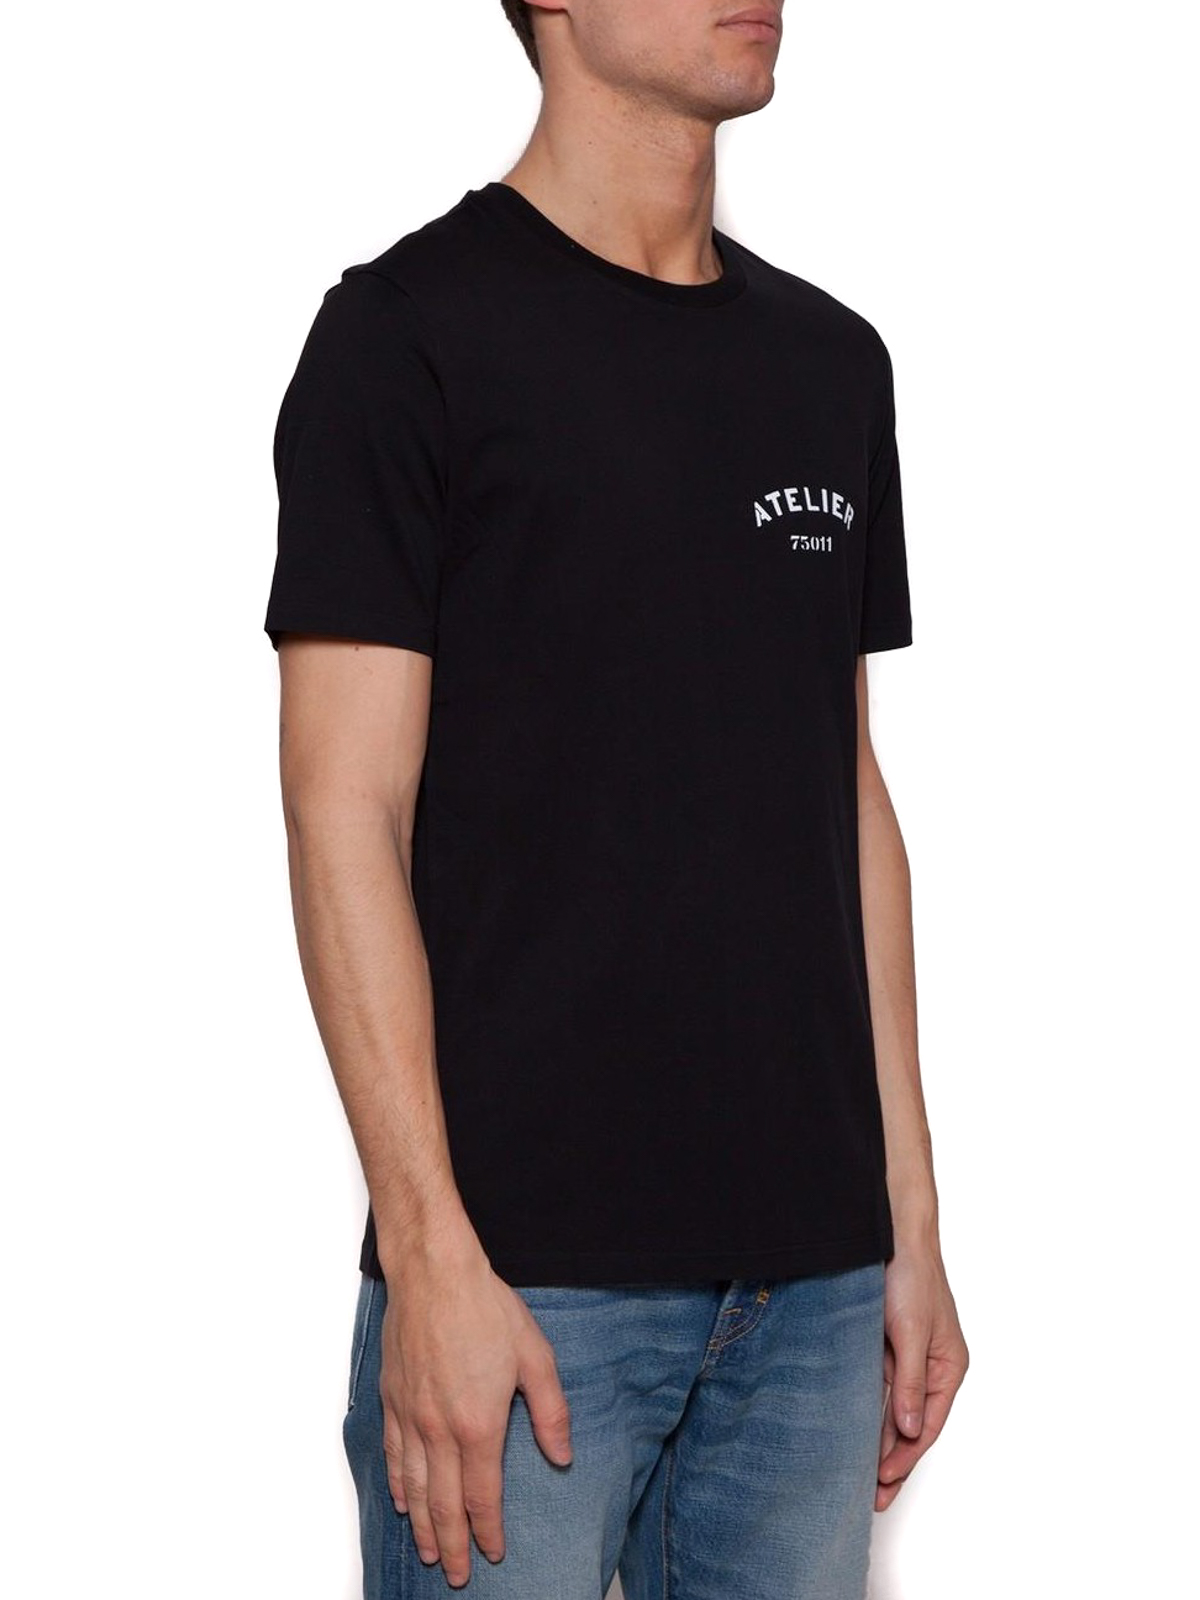 T-shirts Maison Margiela - Atelier print black T-shirt 